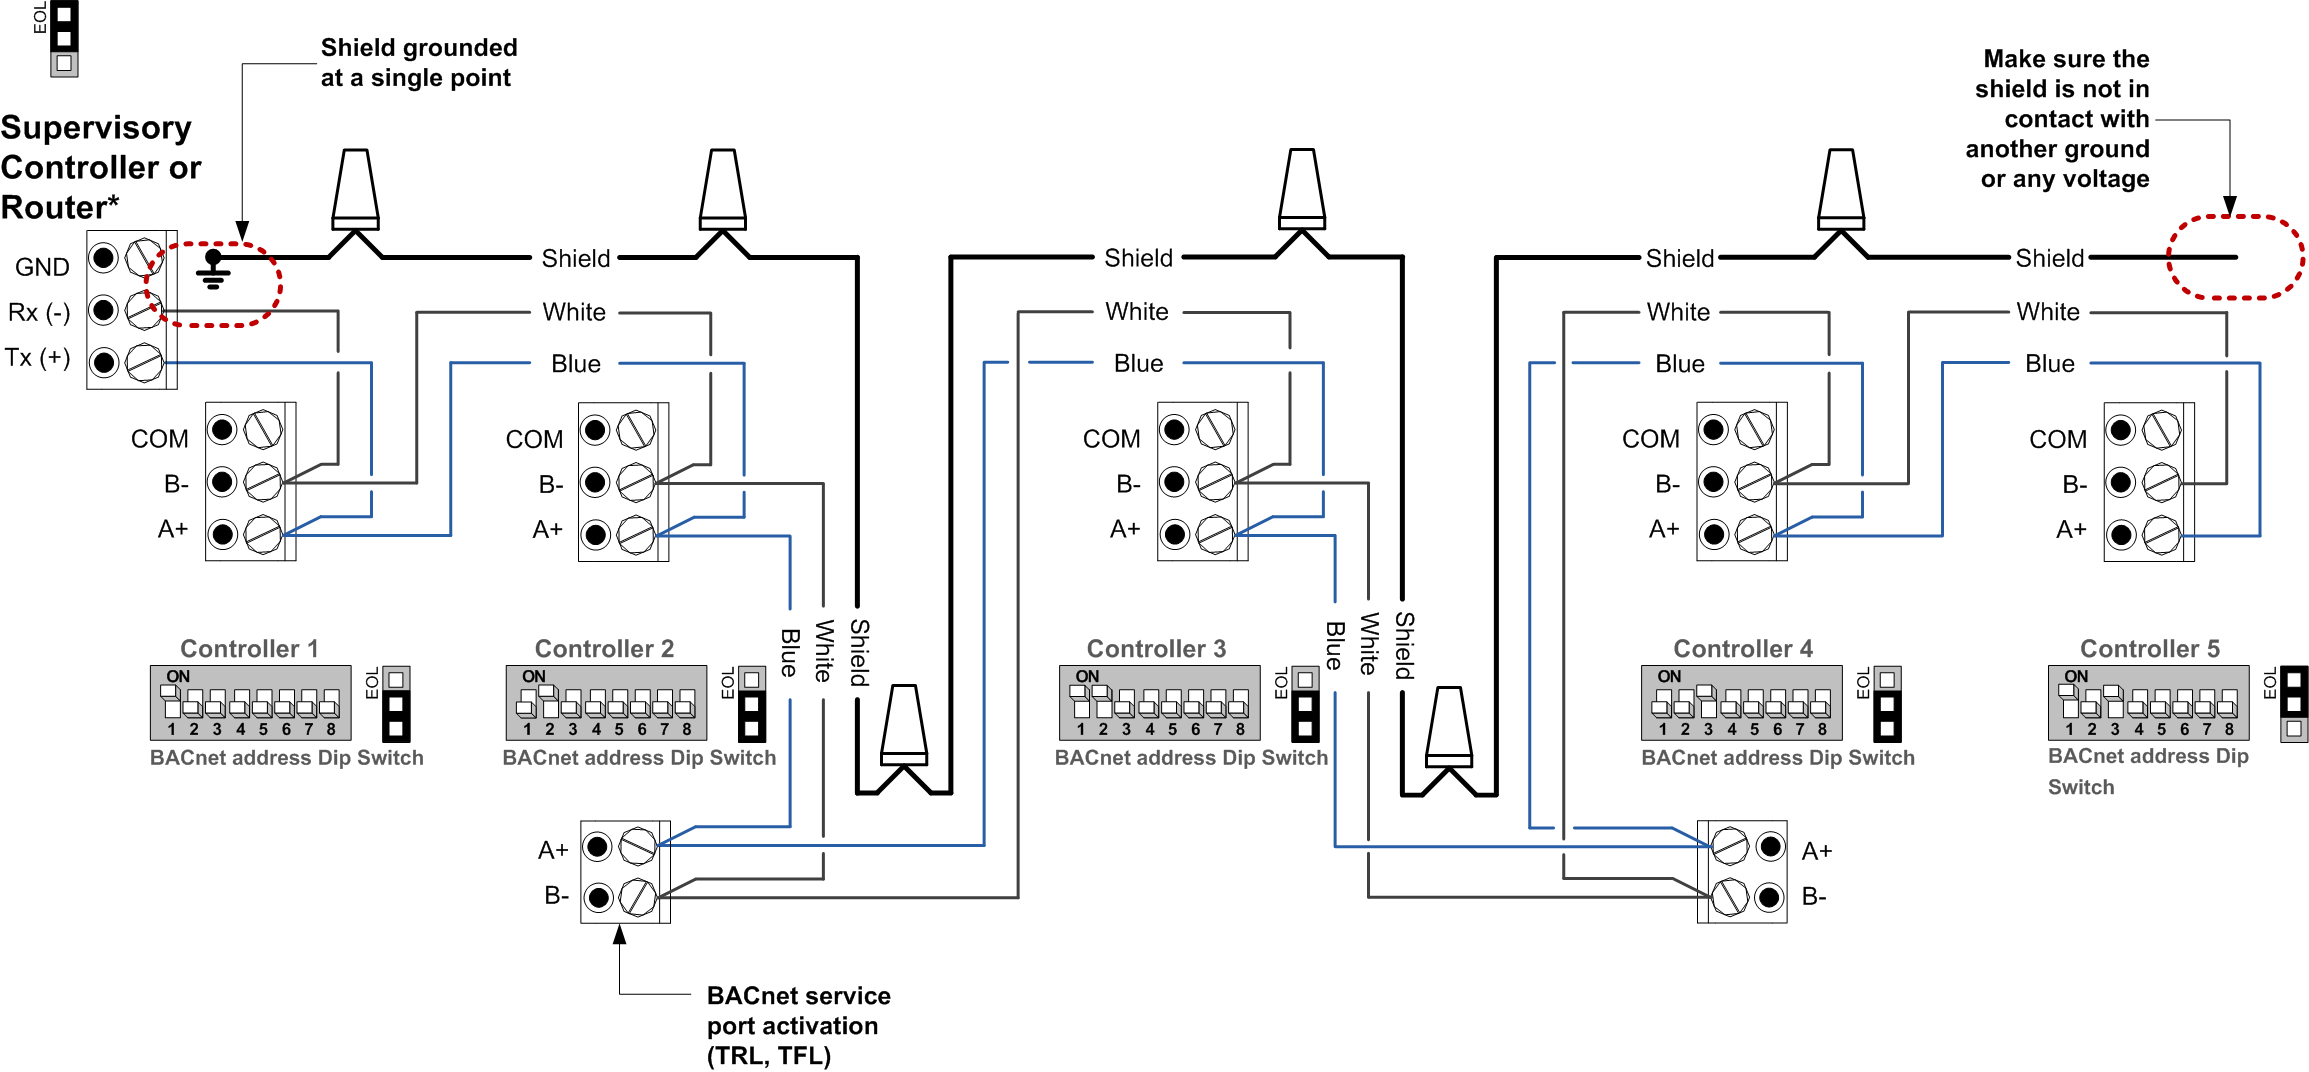 ribu1c relay wiring diagram